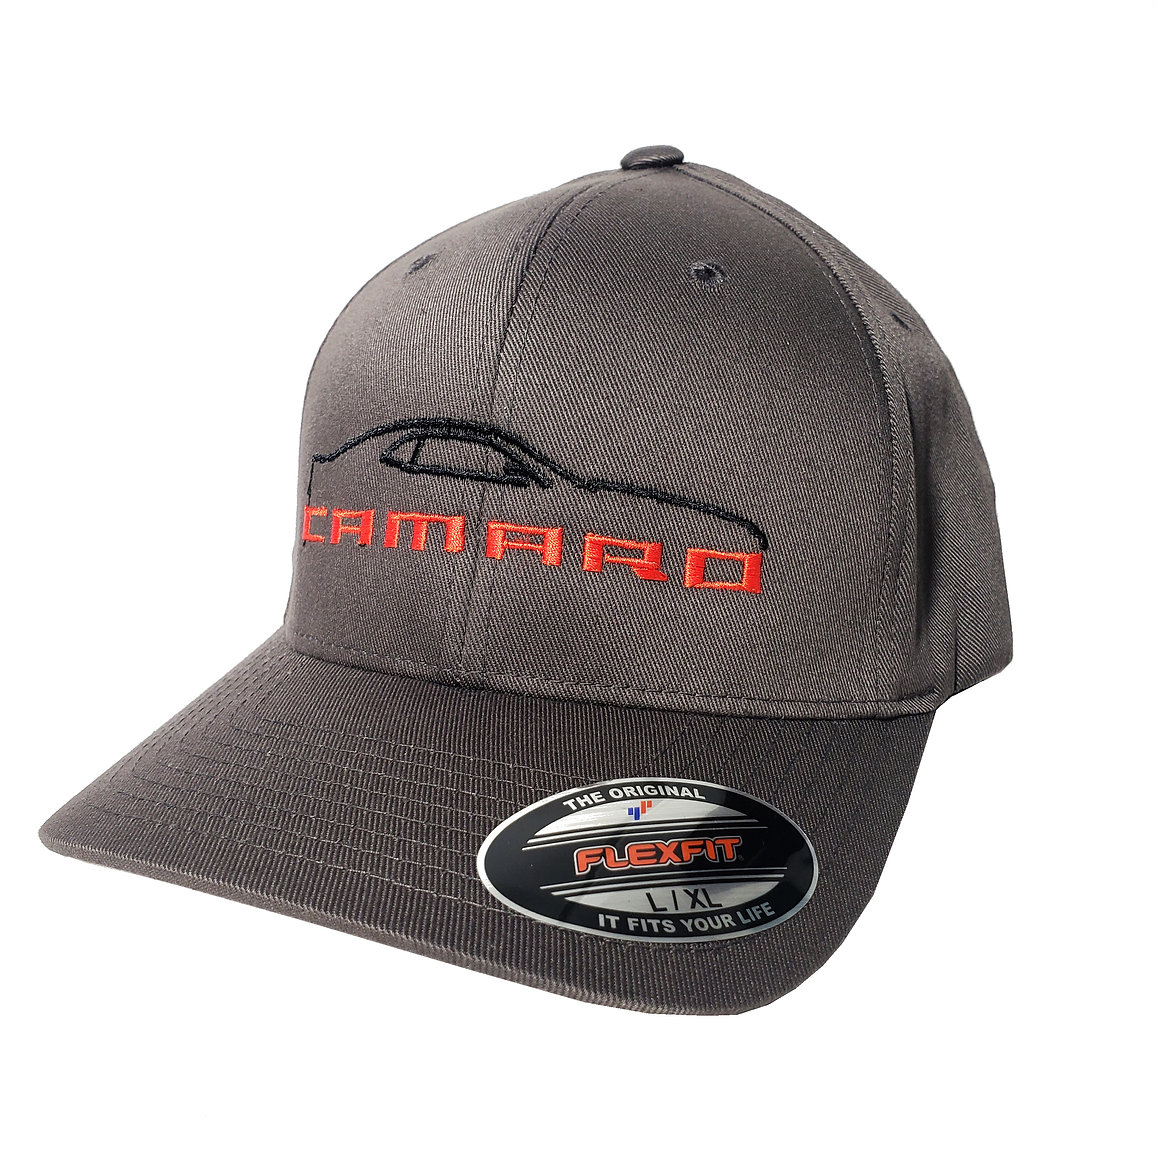 Silhouette Gen Fit Black Sale Flex On Hat : Coast |West Camaro 5th Camaro